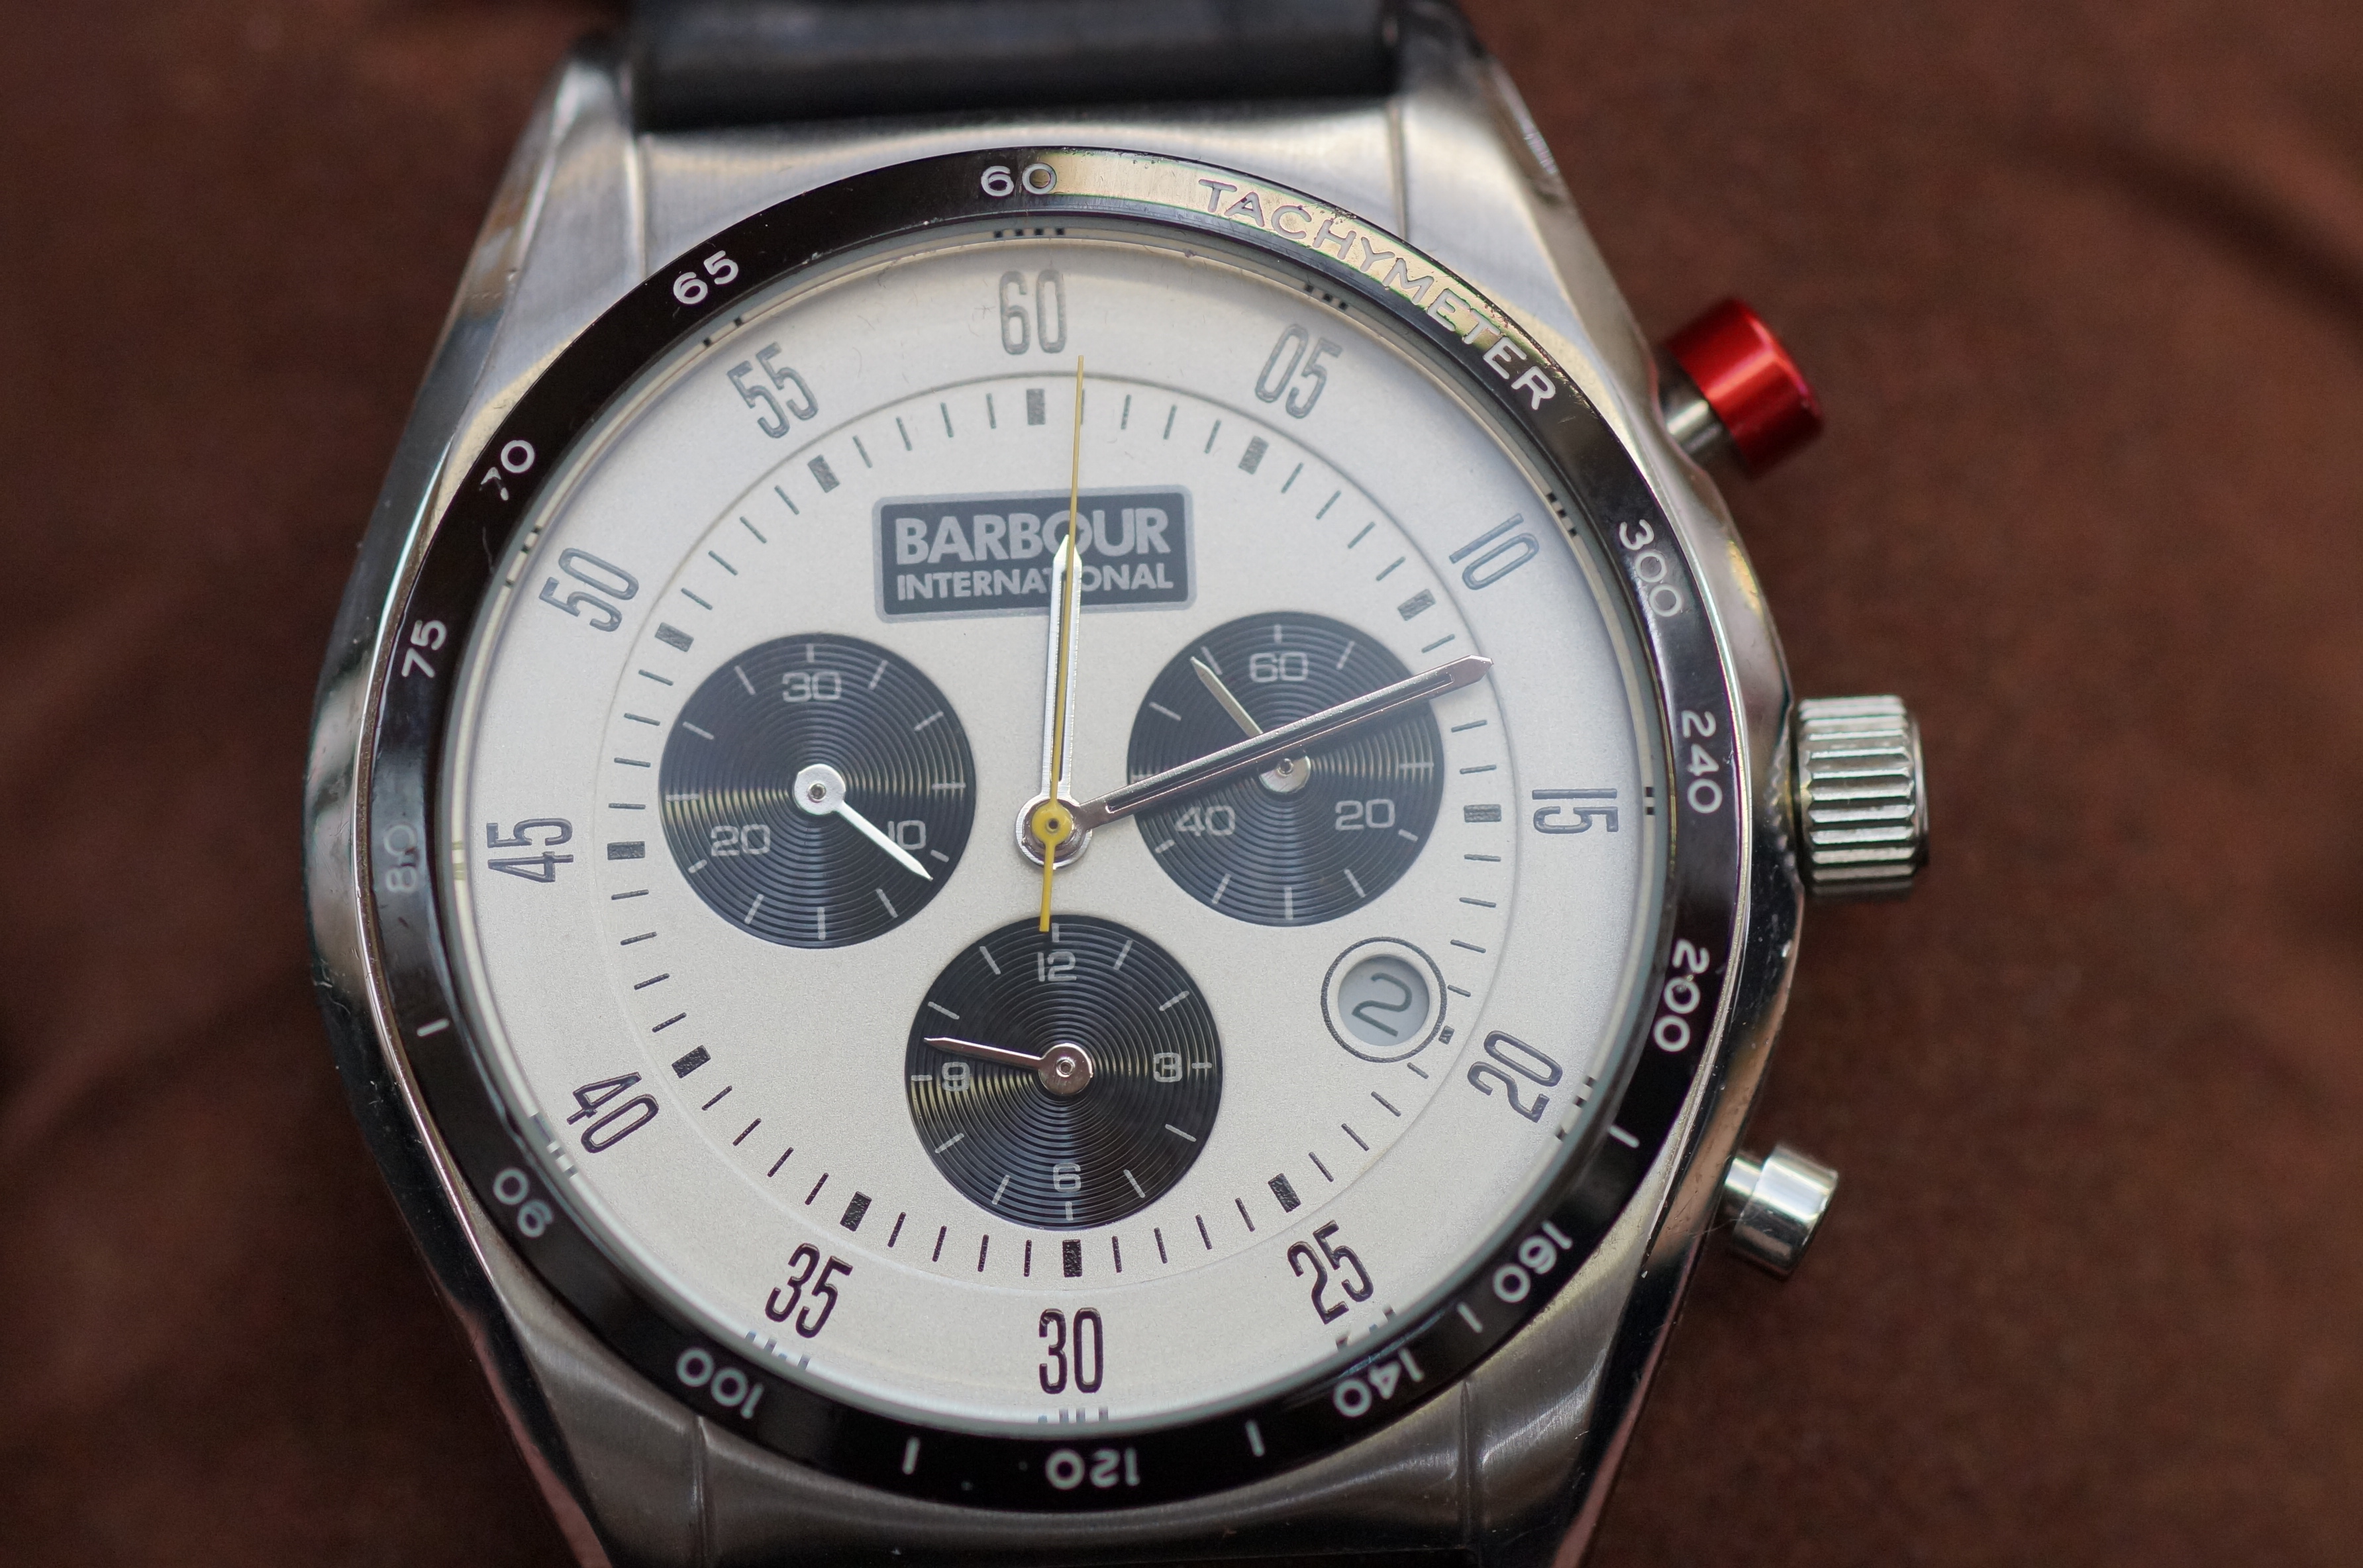 Gents Barbour international chronograph wristwatch